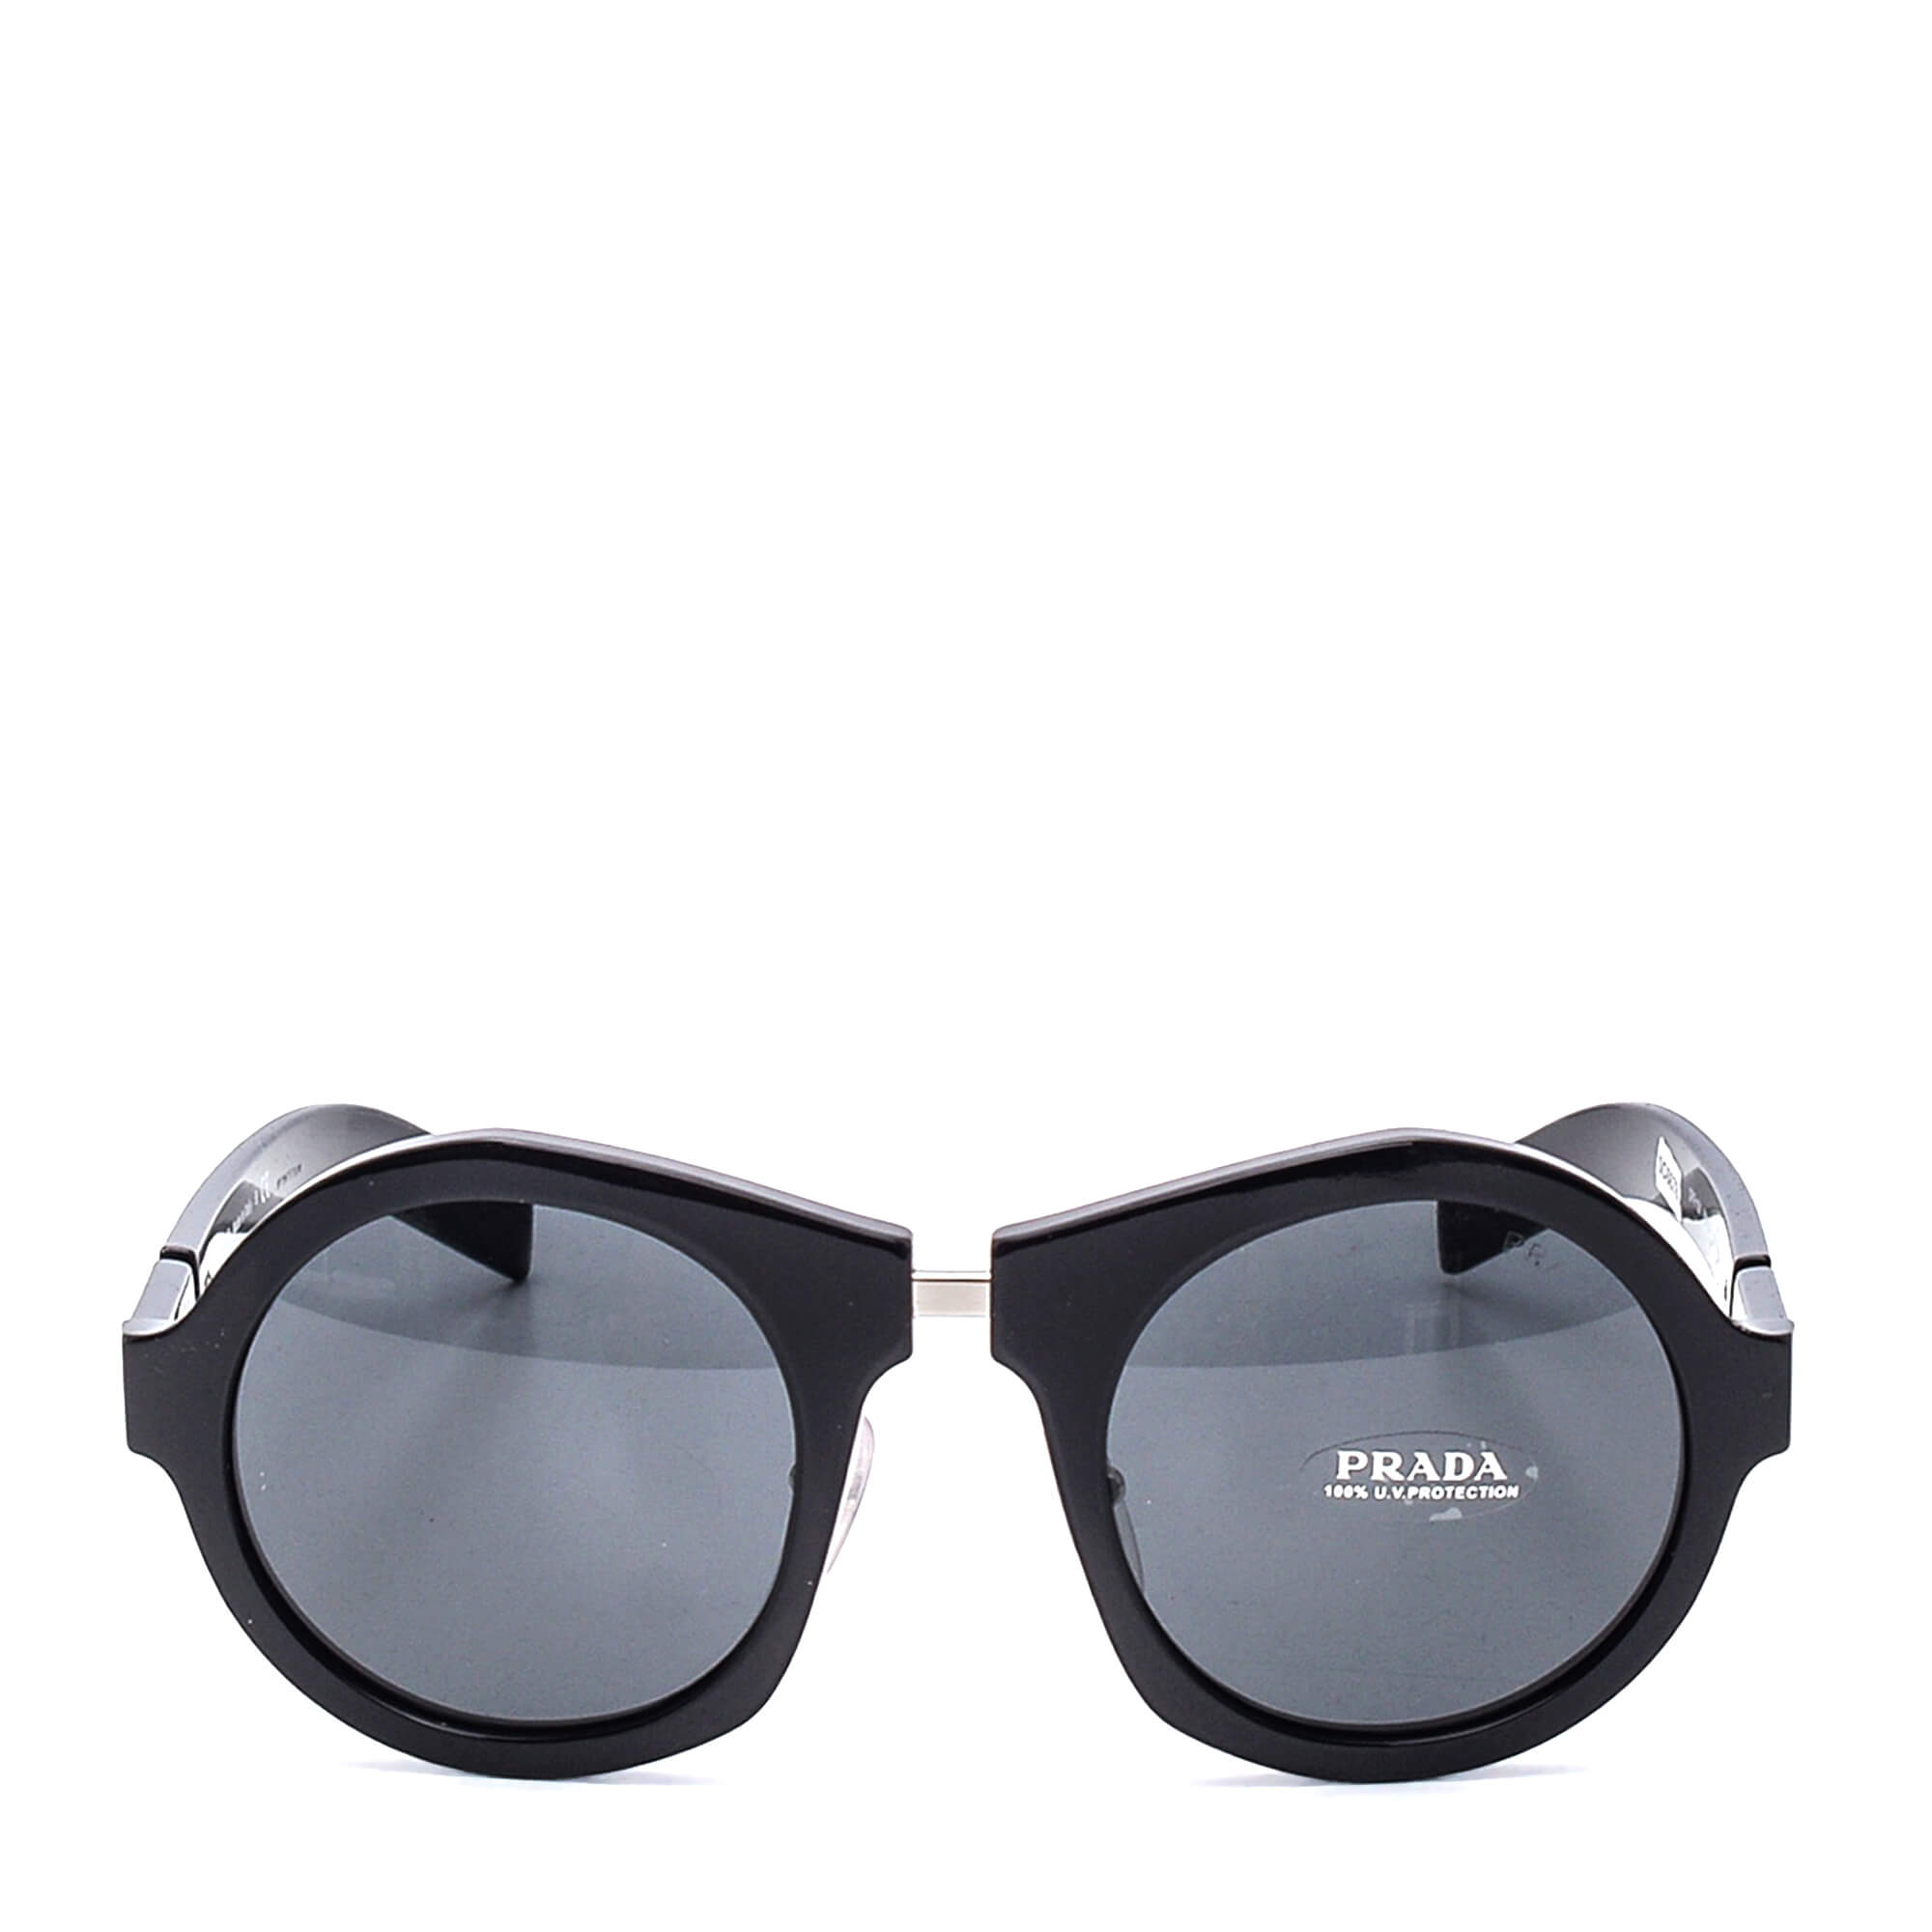 Prada - Black&Siler Around Sunglasses